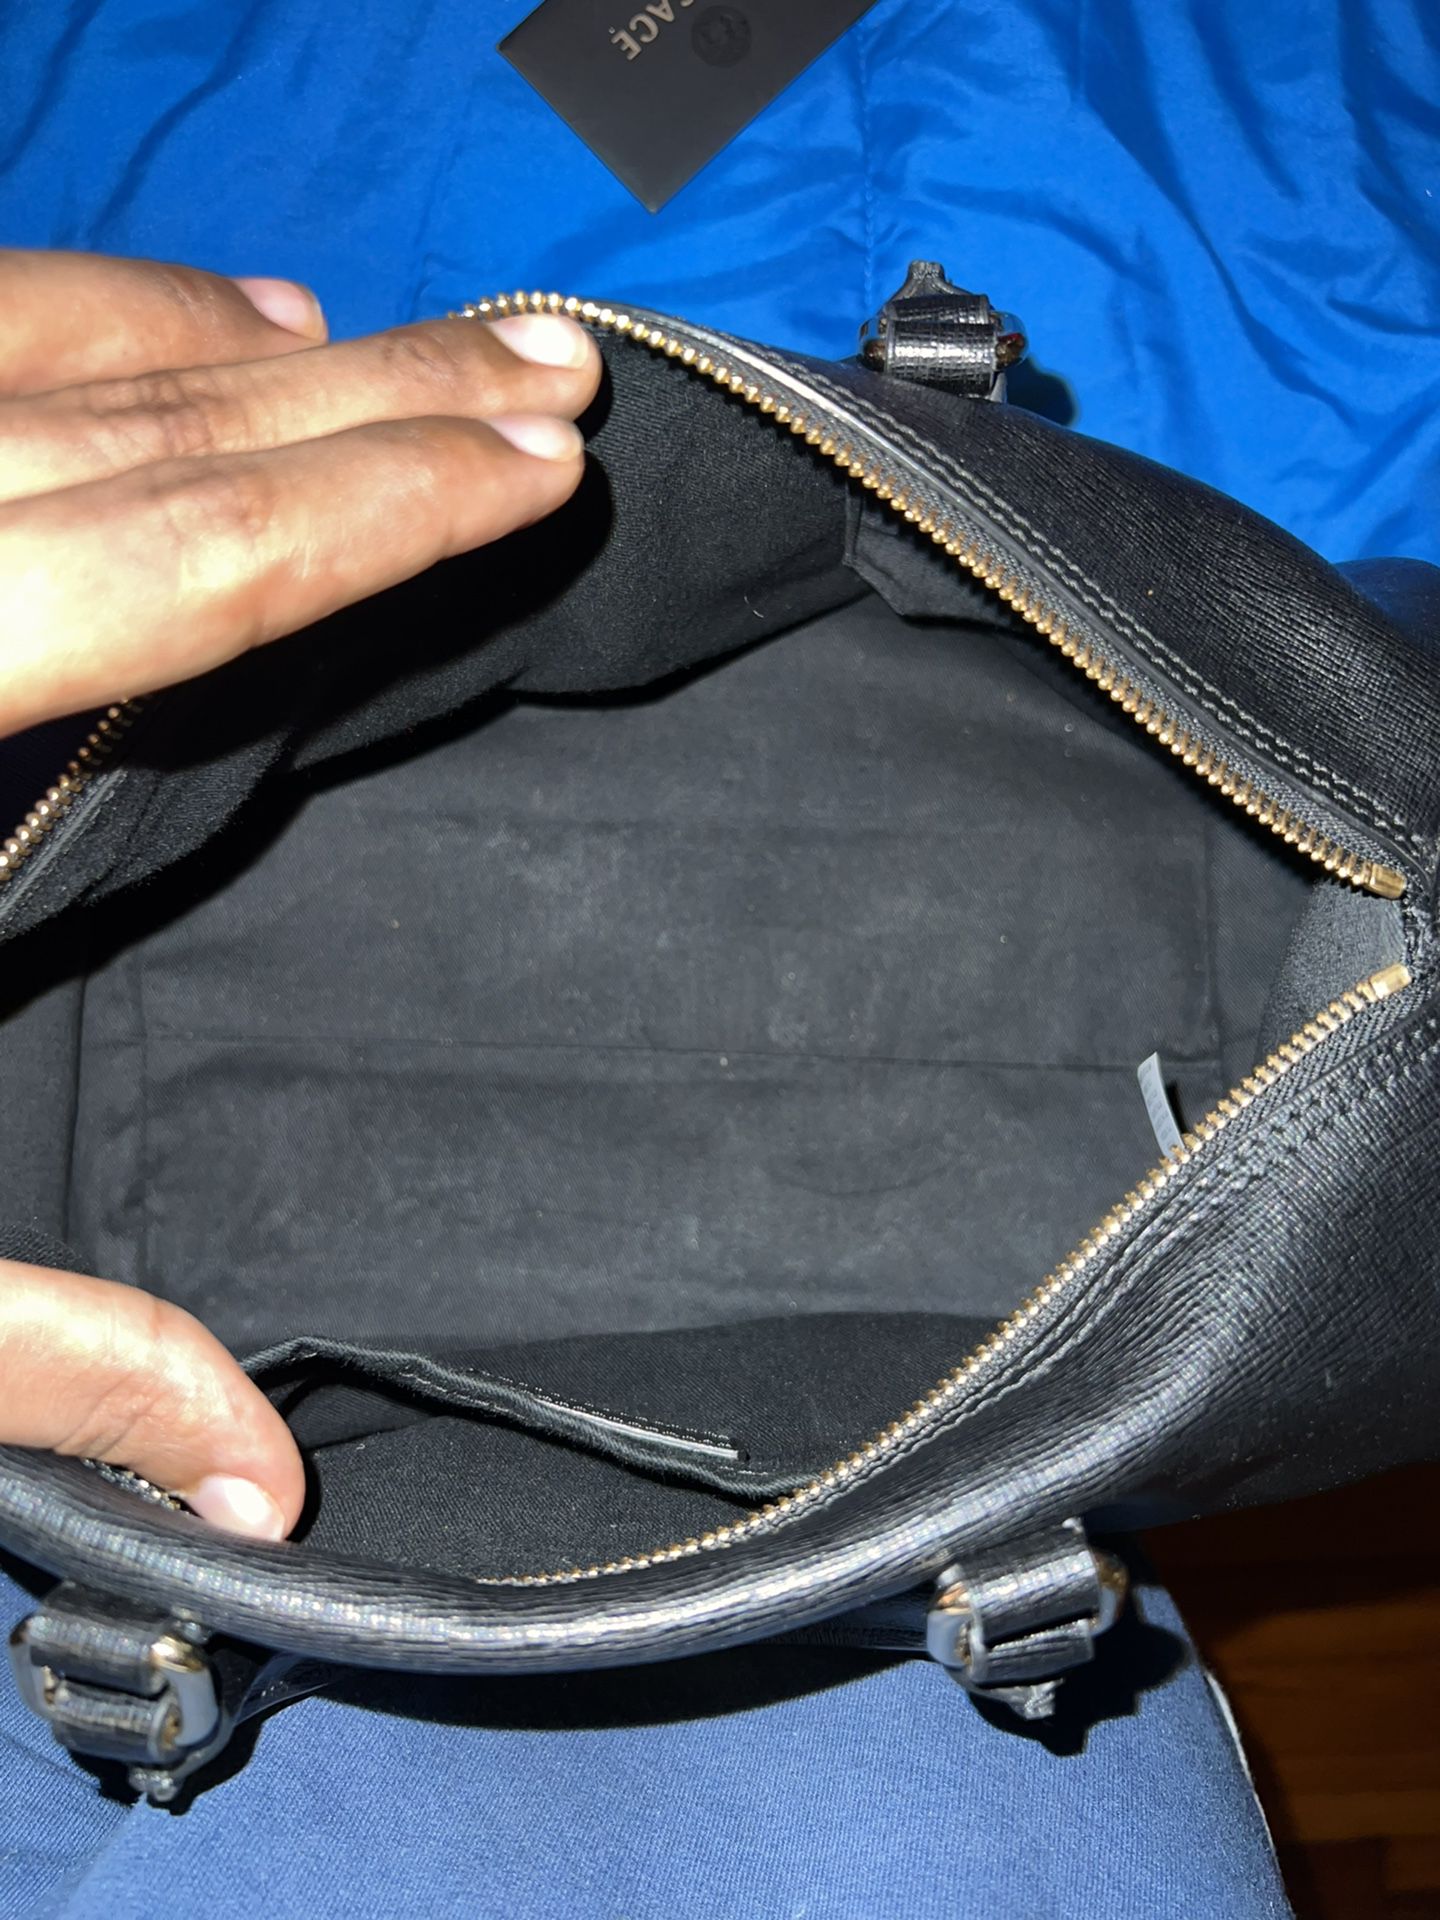 ❤️‍🔥Versace Medusa leather handle bag 🖤